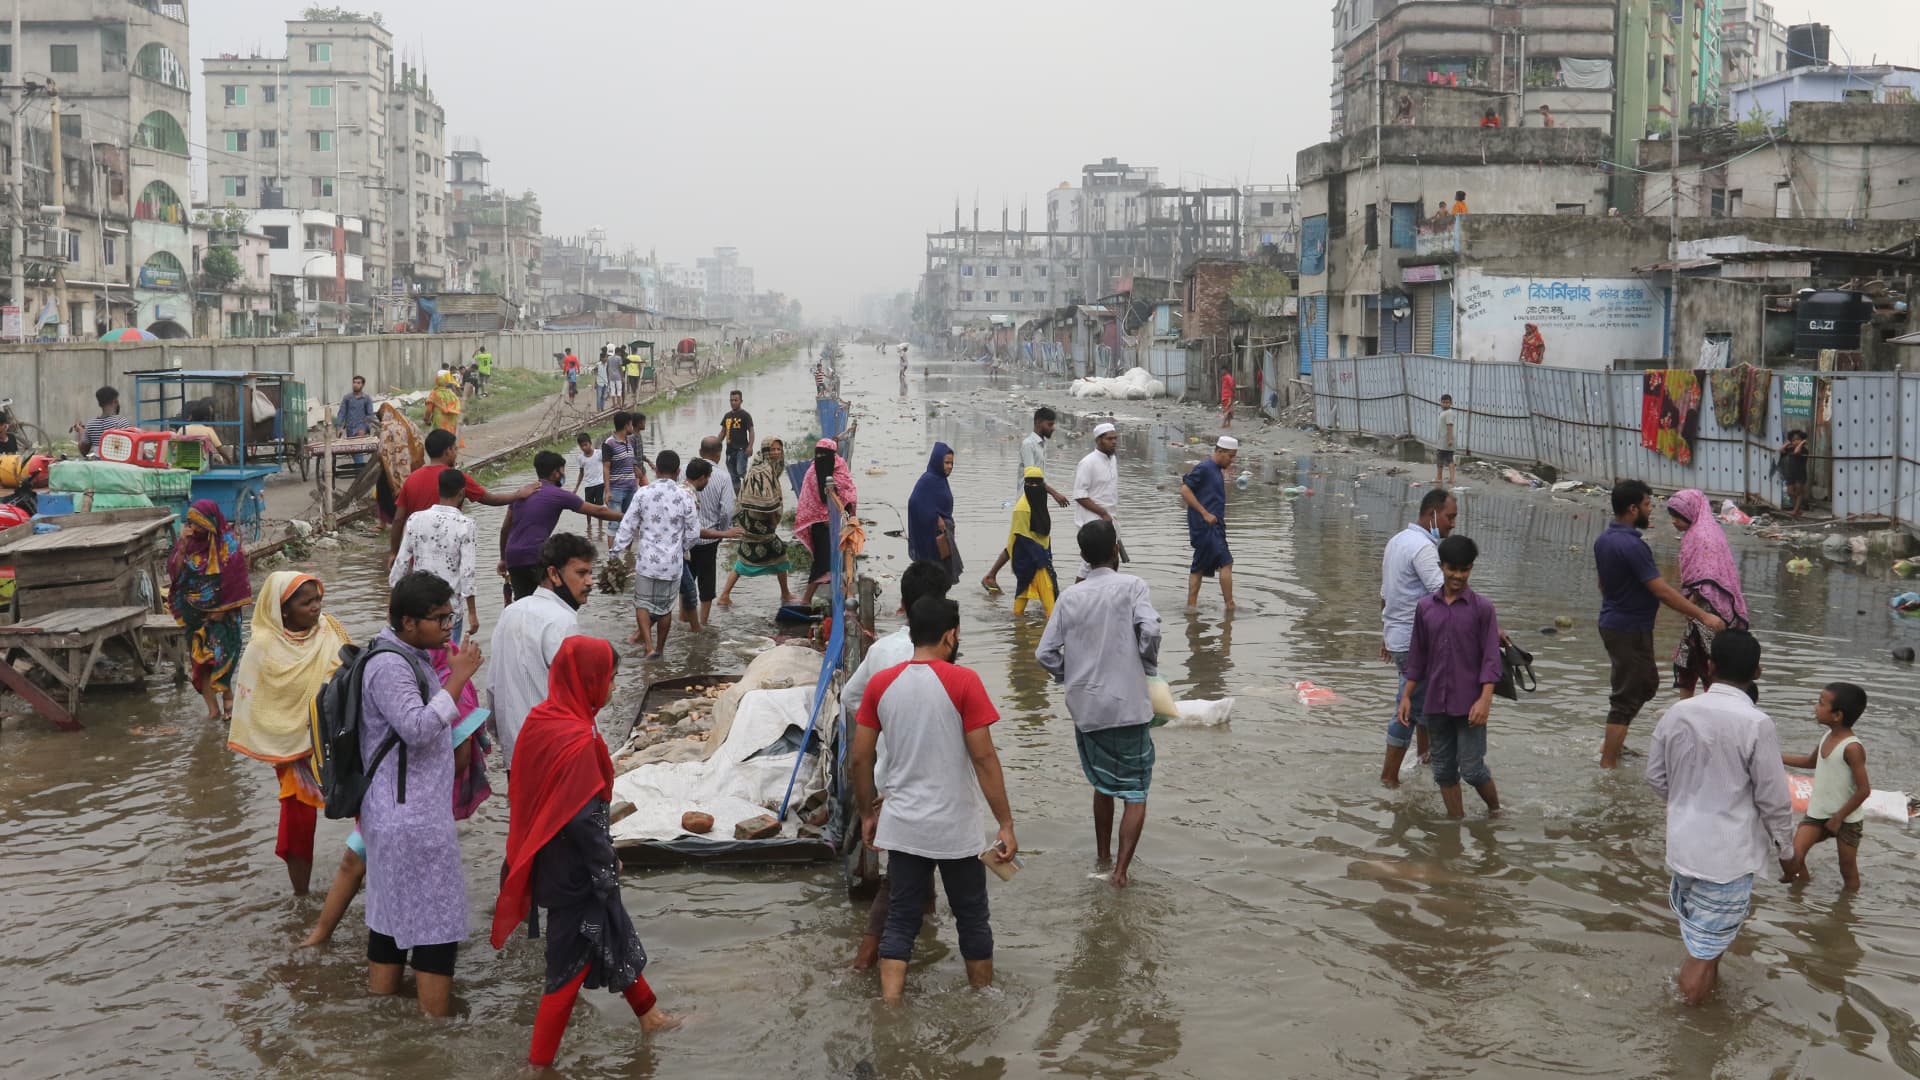 Dozens of people walk through water due to heavy rains causing flooding in Dhaka, Bangladesh on October 7, 2021.